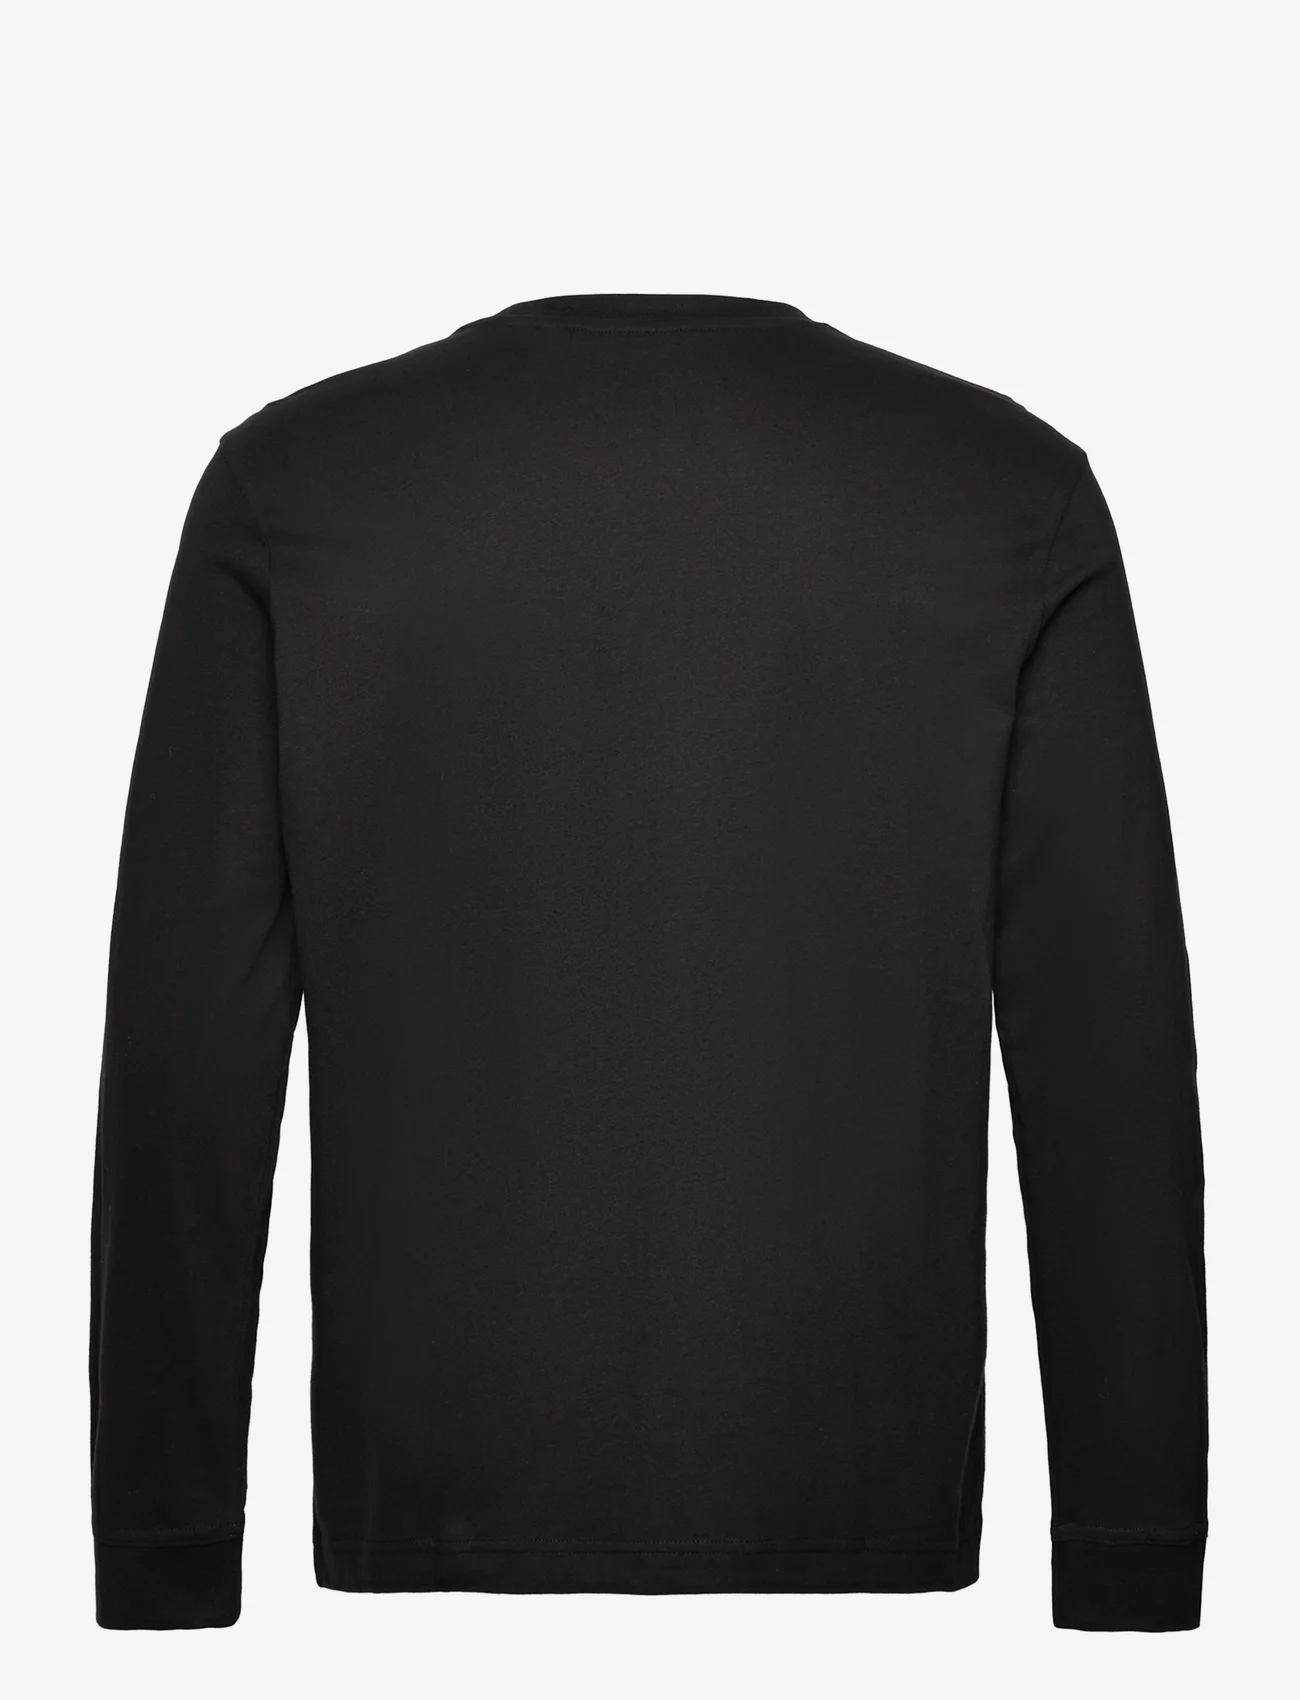 Tom Tailor - basic longsleeve t-shirt - lowest prices - black - 1